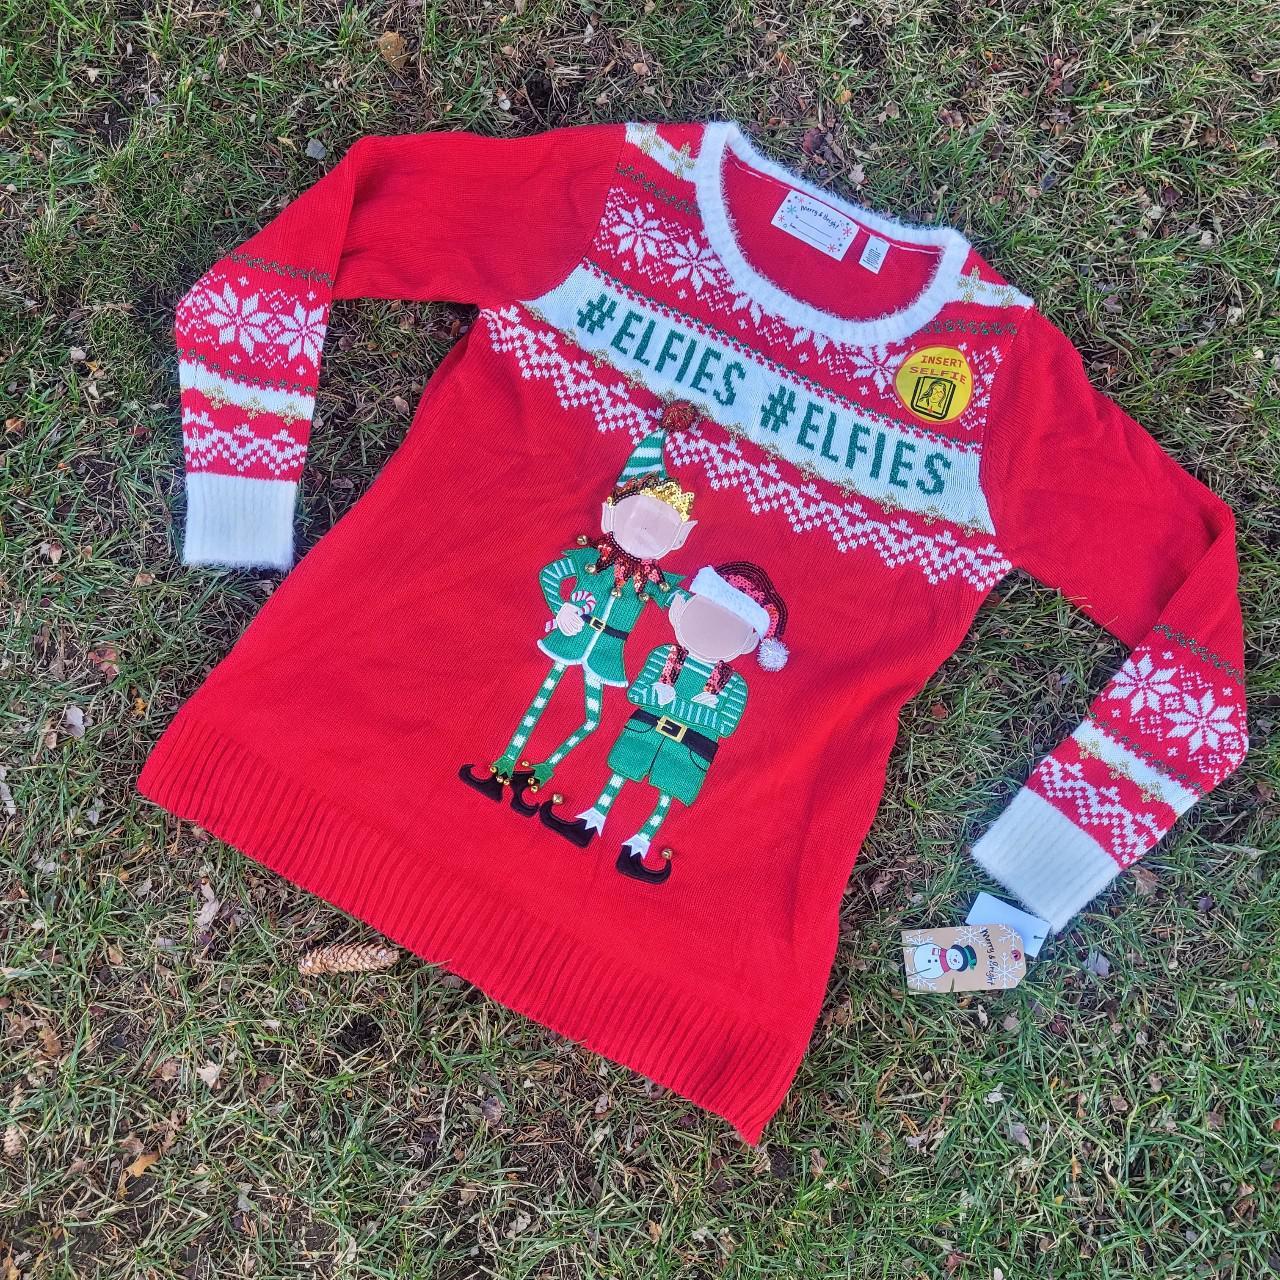 Product Image 1 - Elf Selfie Christmas Sweater
Size Large